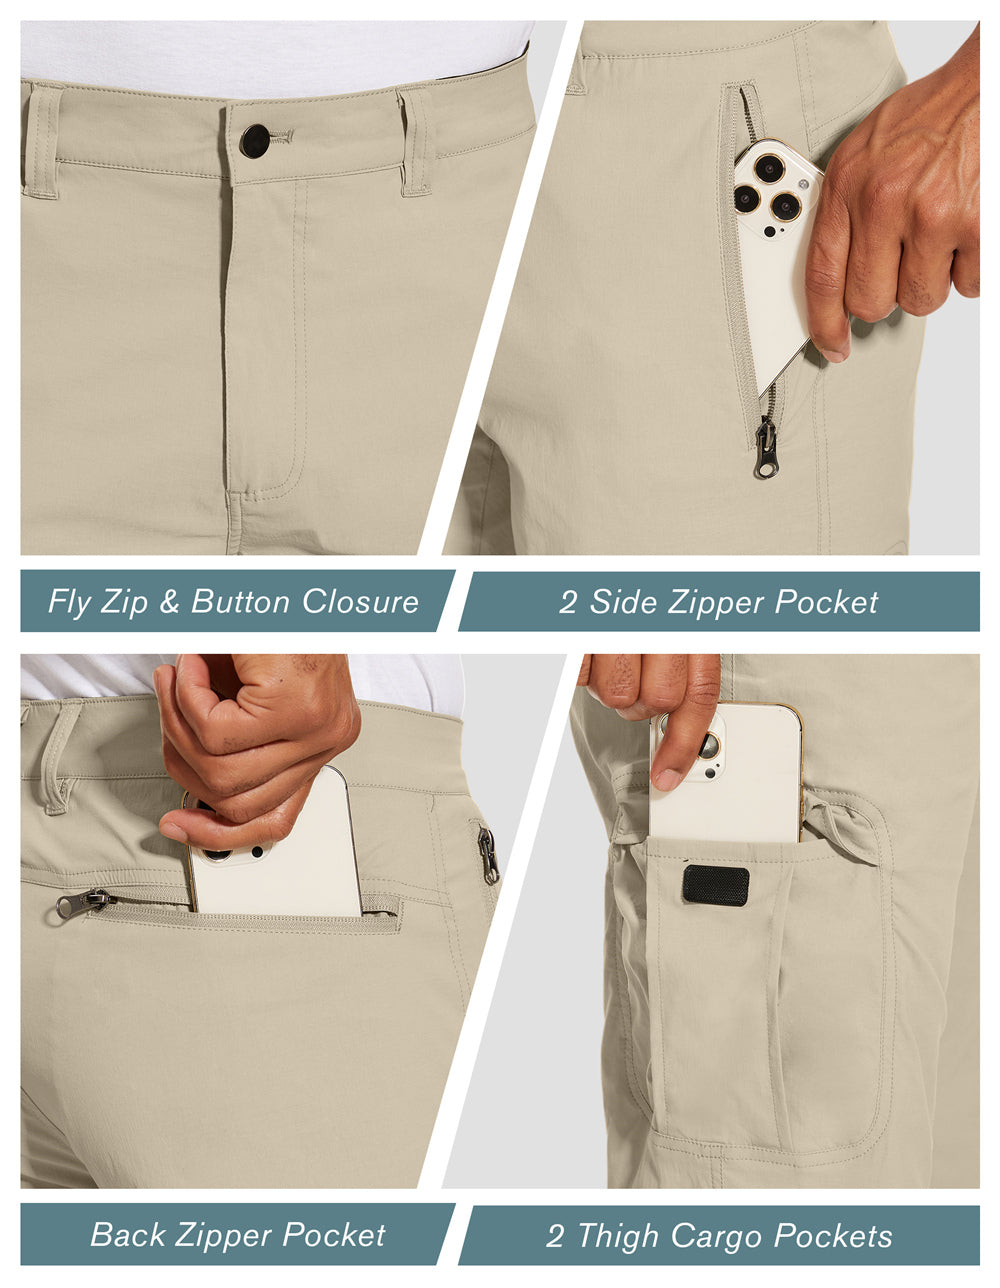 PULI Men's Waterproof Hiking Golf Pants with Pockets